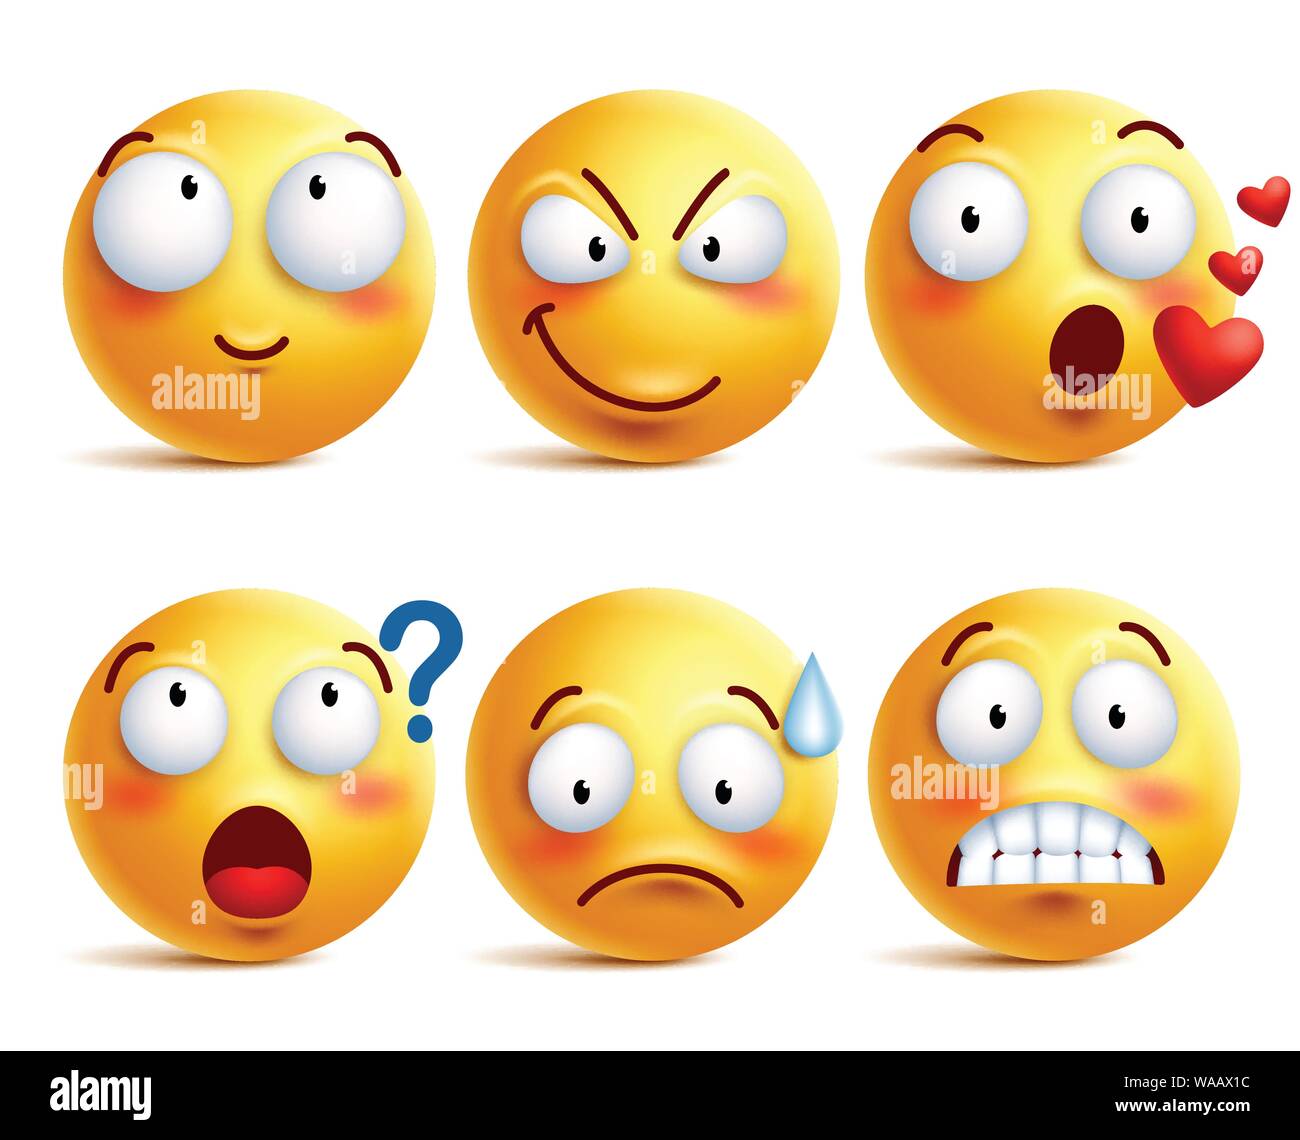 Smileys vector set. Yellow smiley face or emoticons with facial ...